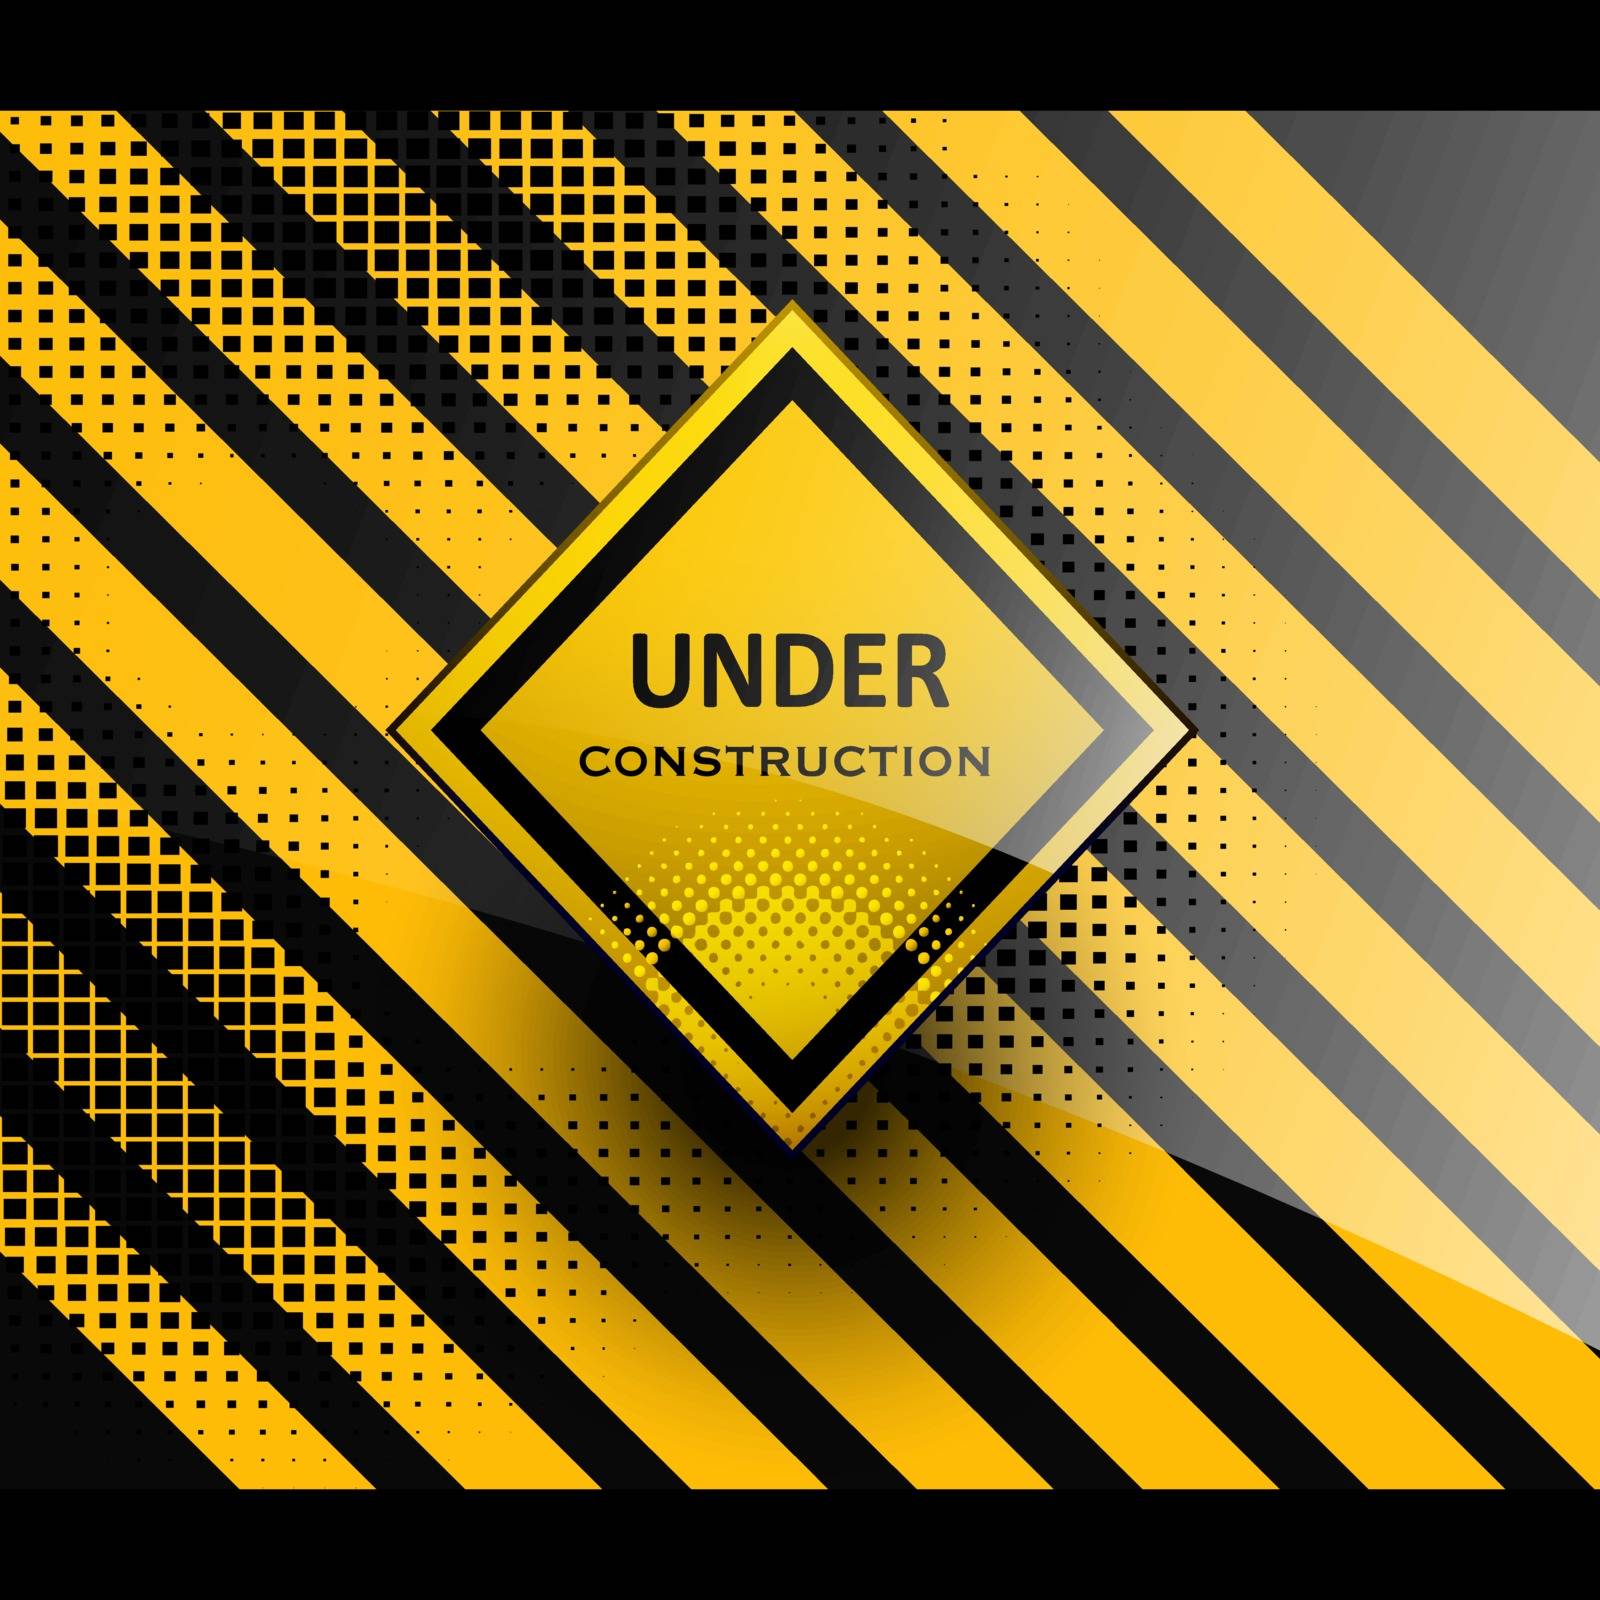 Under construction background by nolimit046